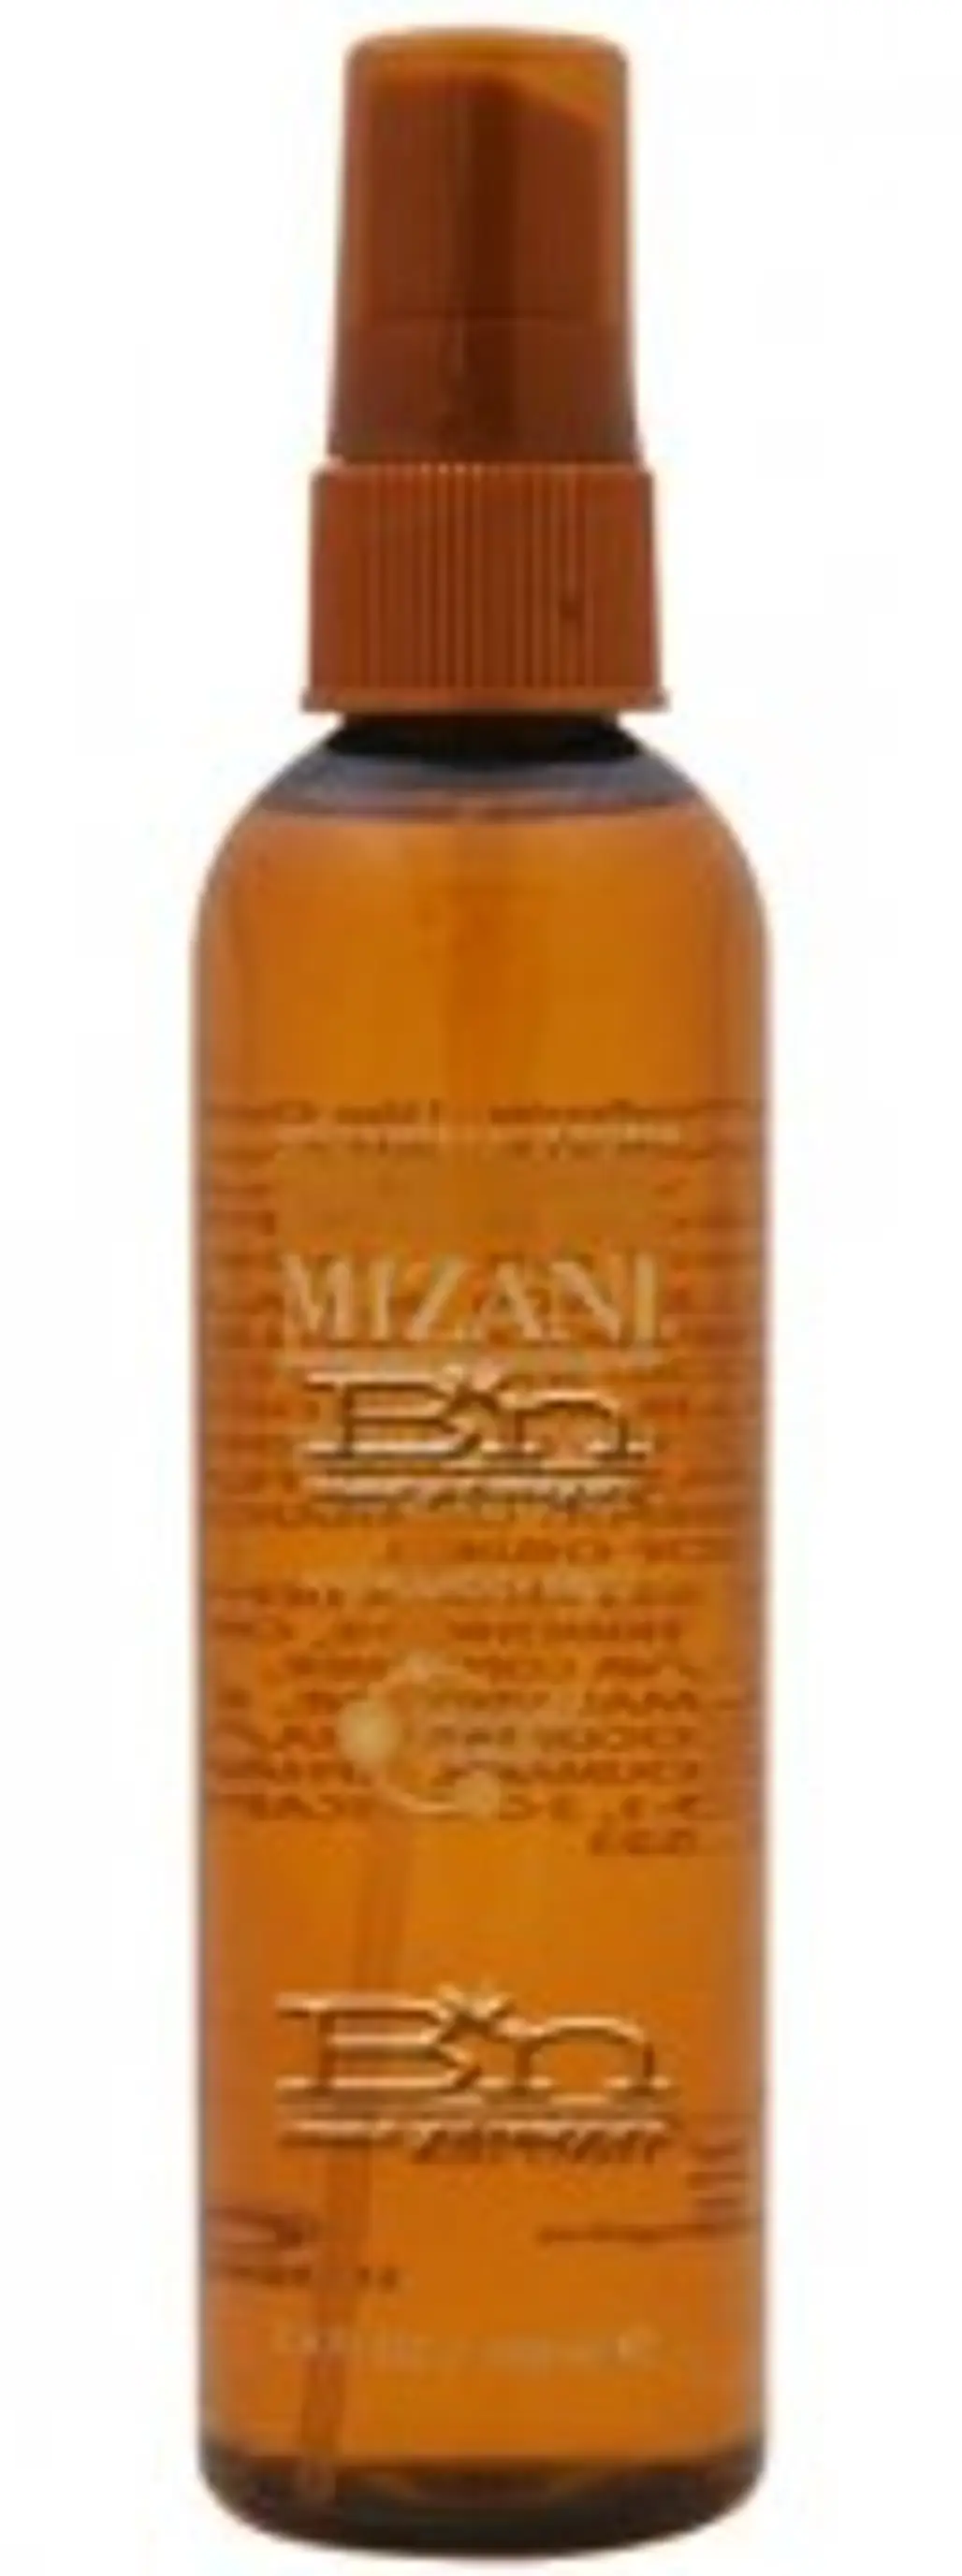 Thermasmooth Shine Extend anti Humidity Spritz by Mizani